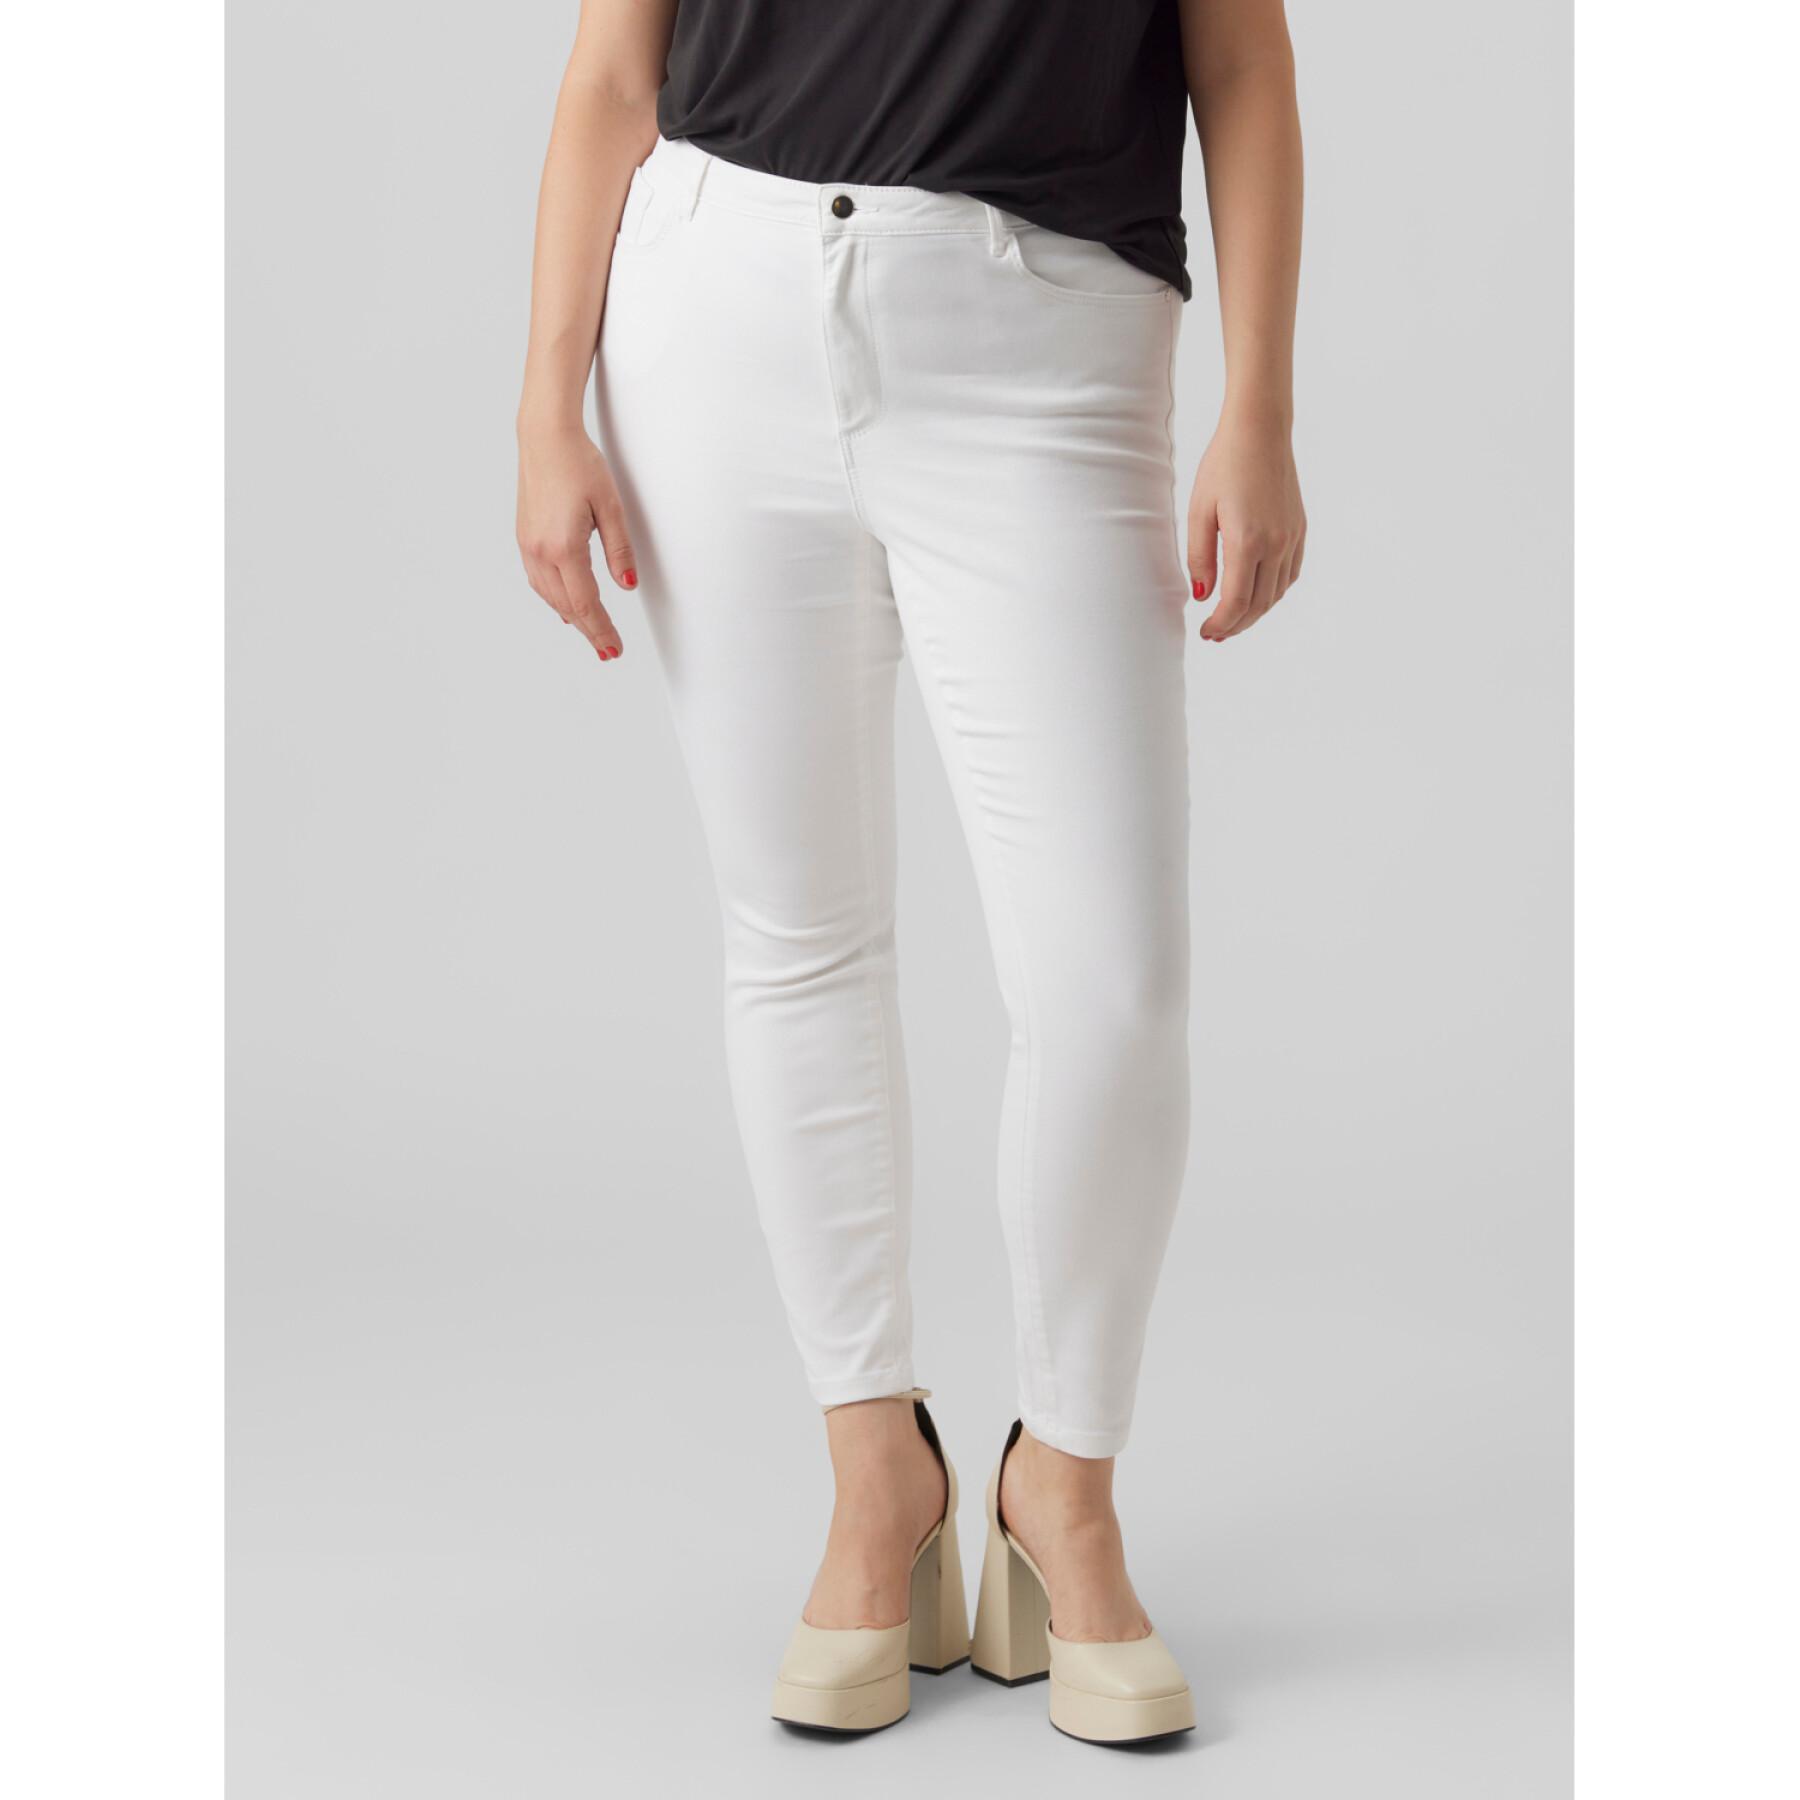 Jeans mujeres delgadas Vero Moda Soft Phia Soft VI403